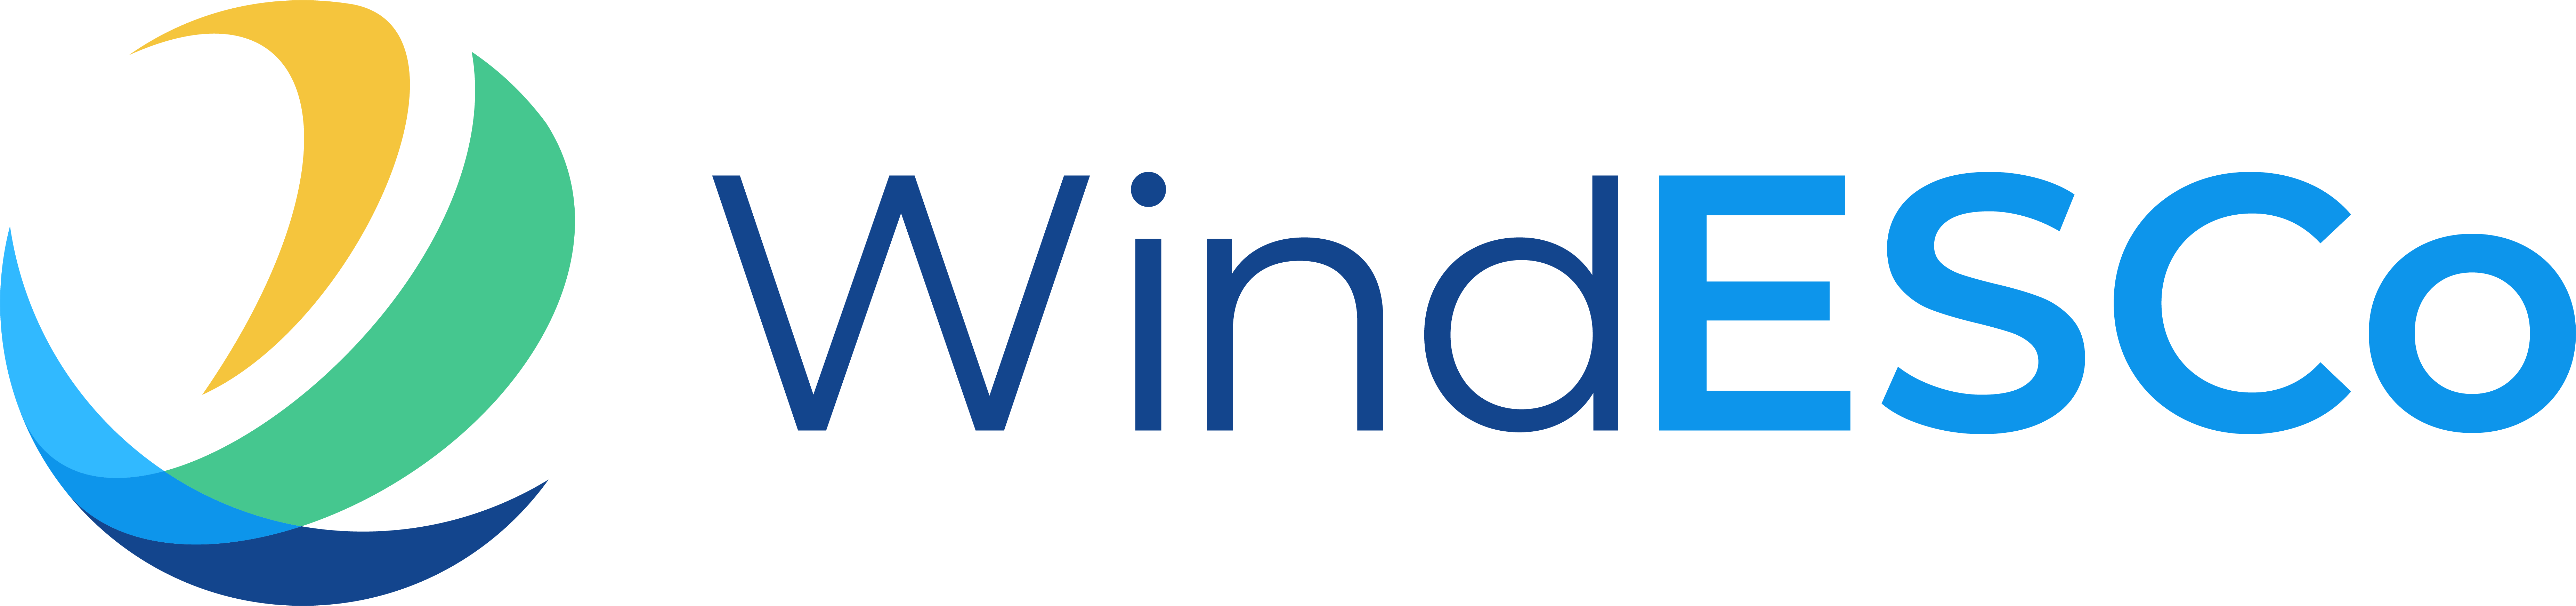 WindESCo Horizontal Logo-01-2